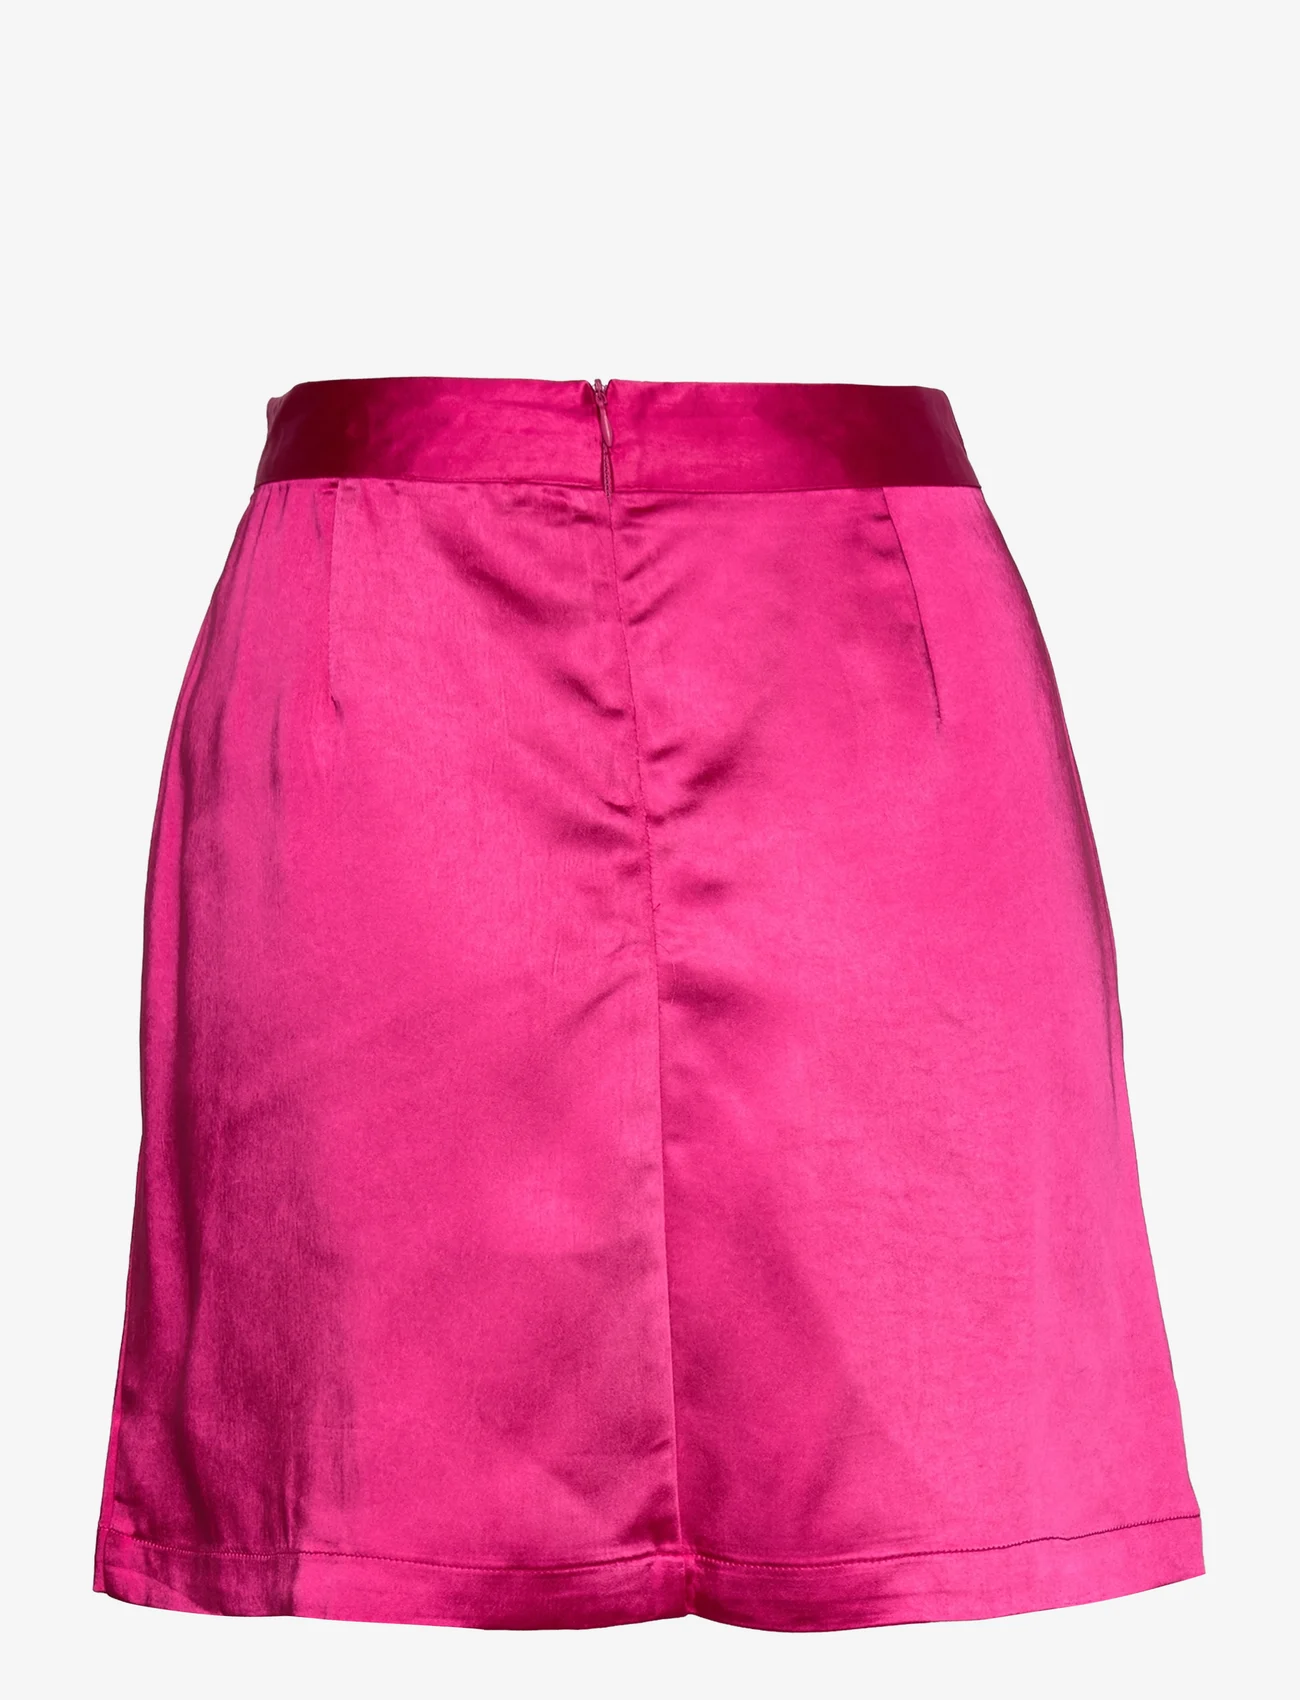 bzr - Satina Molanna skirt - short skirts - pink - 1